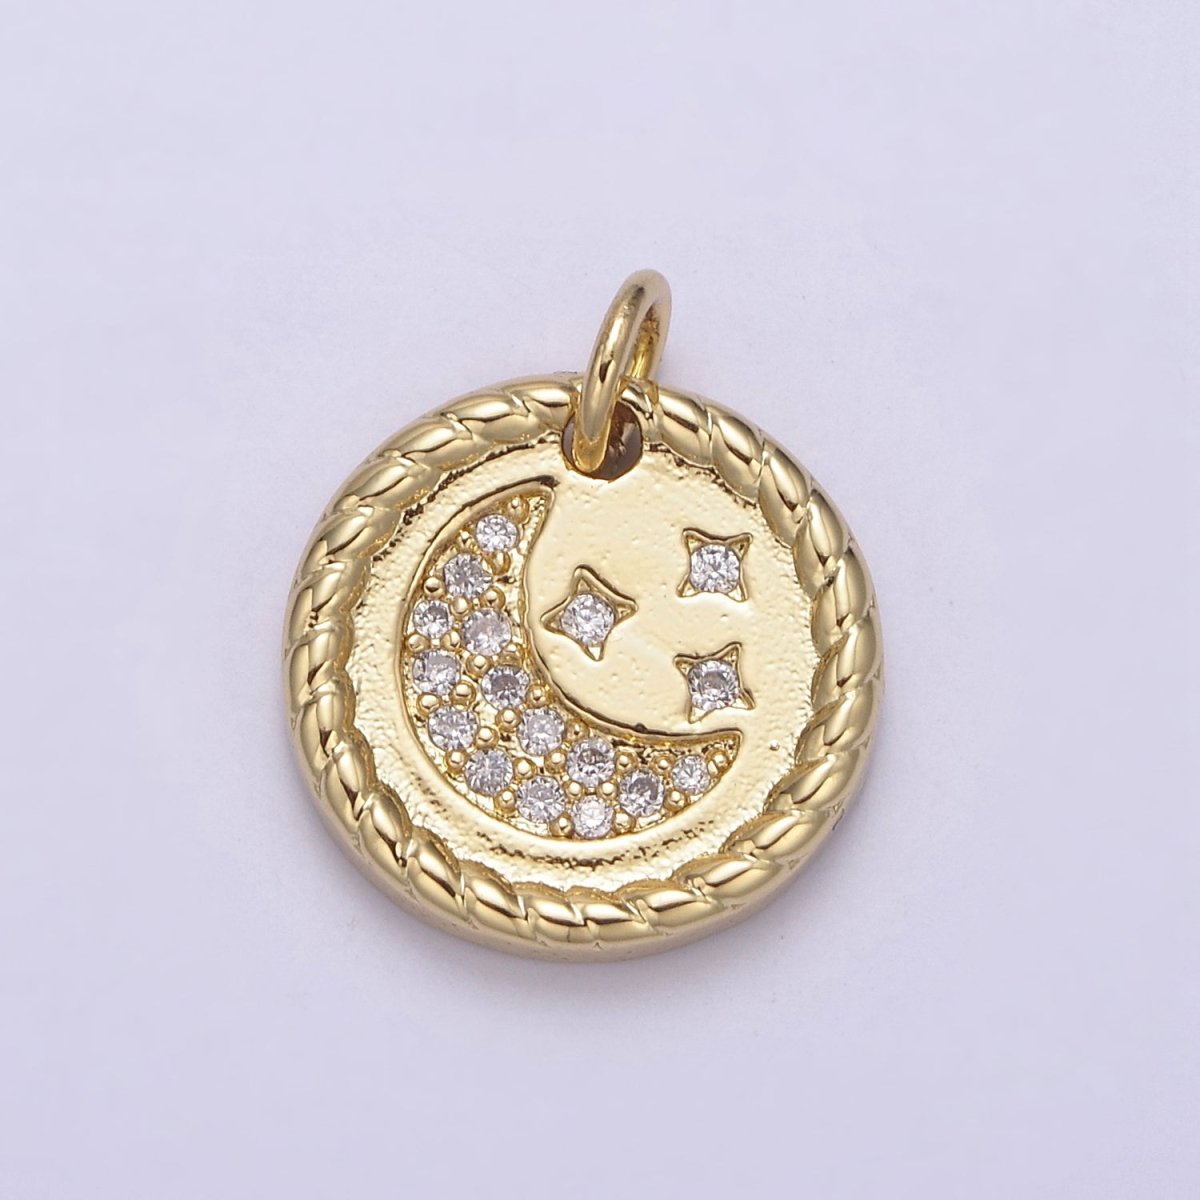 Mini Celestial Charm 14k Gold Filled Crescent Moon Star Charm Add on Charm for Bracelet Necklace Earring N-810 - DLUXCA